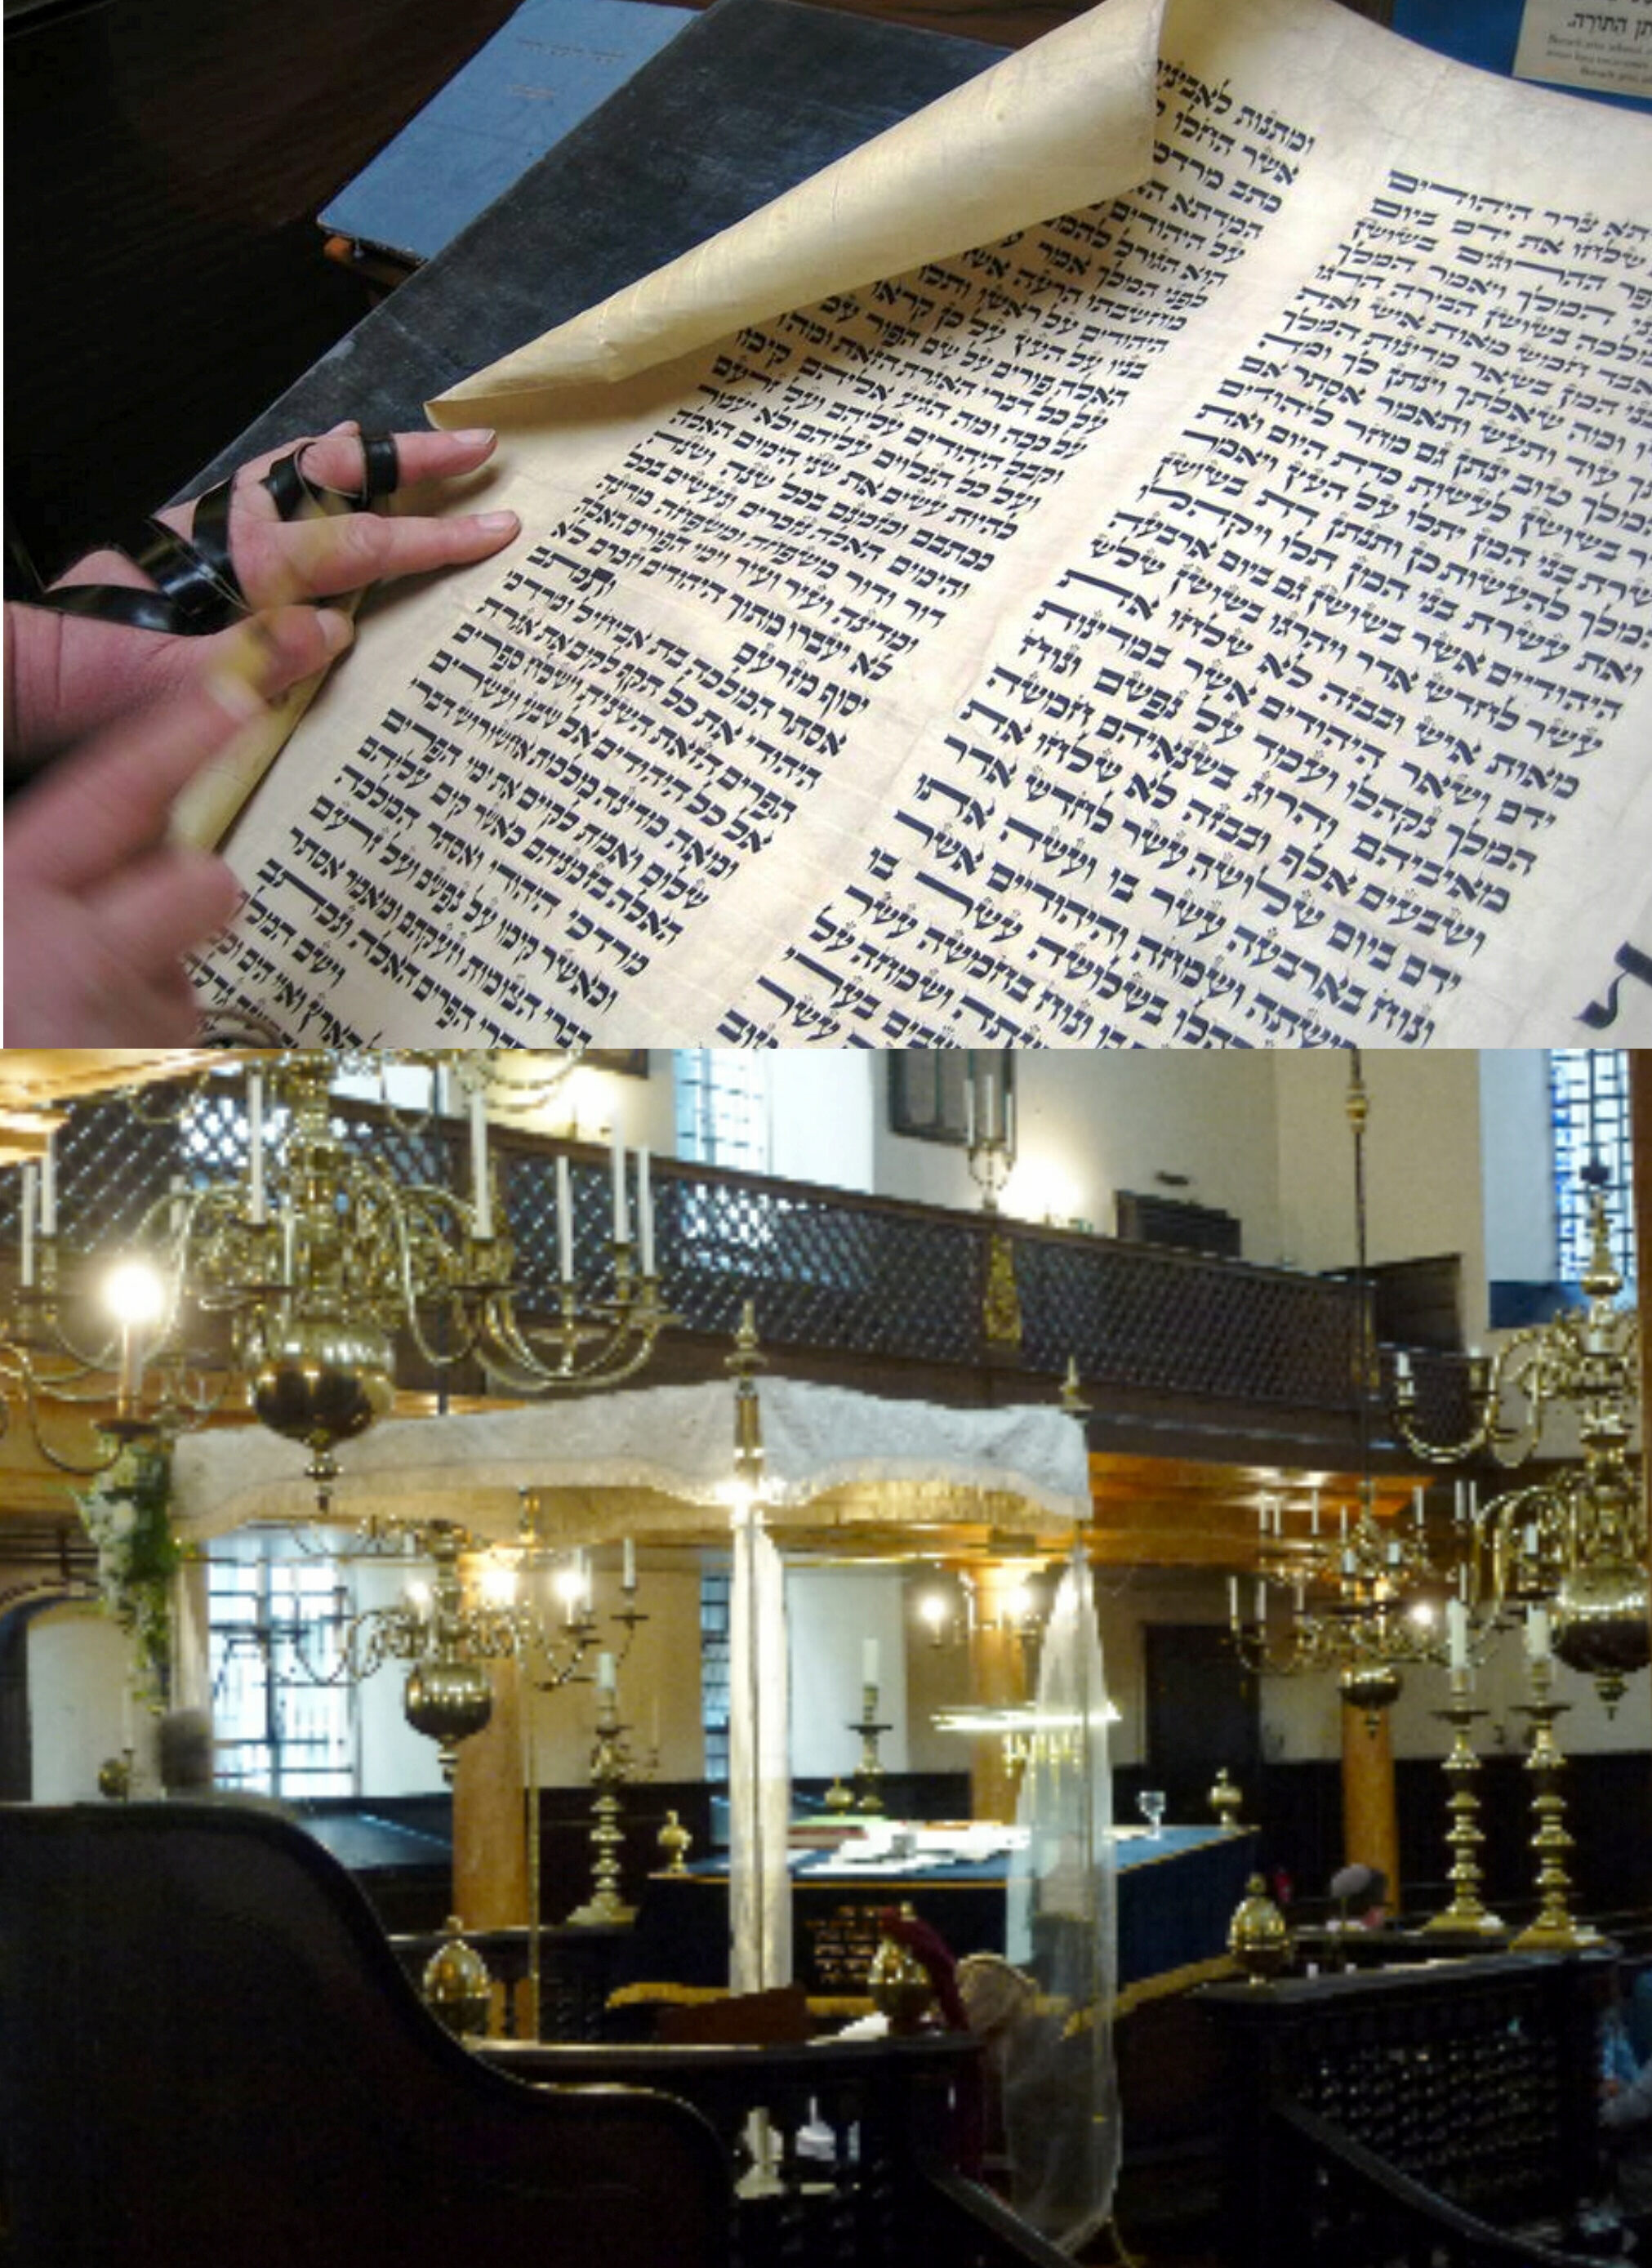 Wedding Canopy and Purim scroll